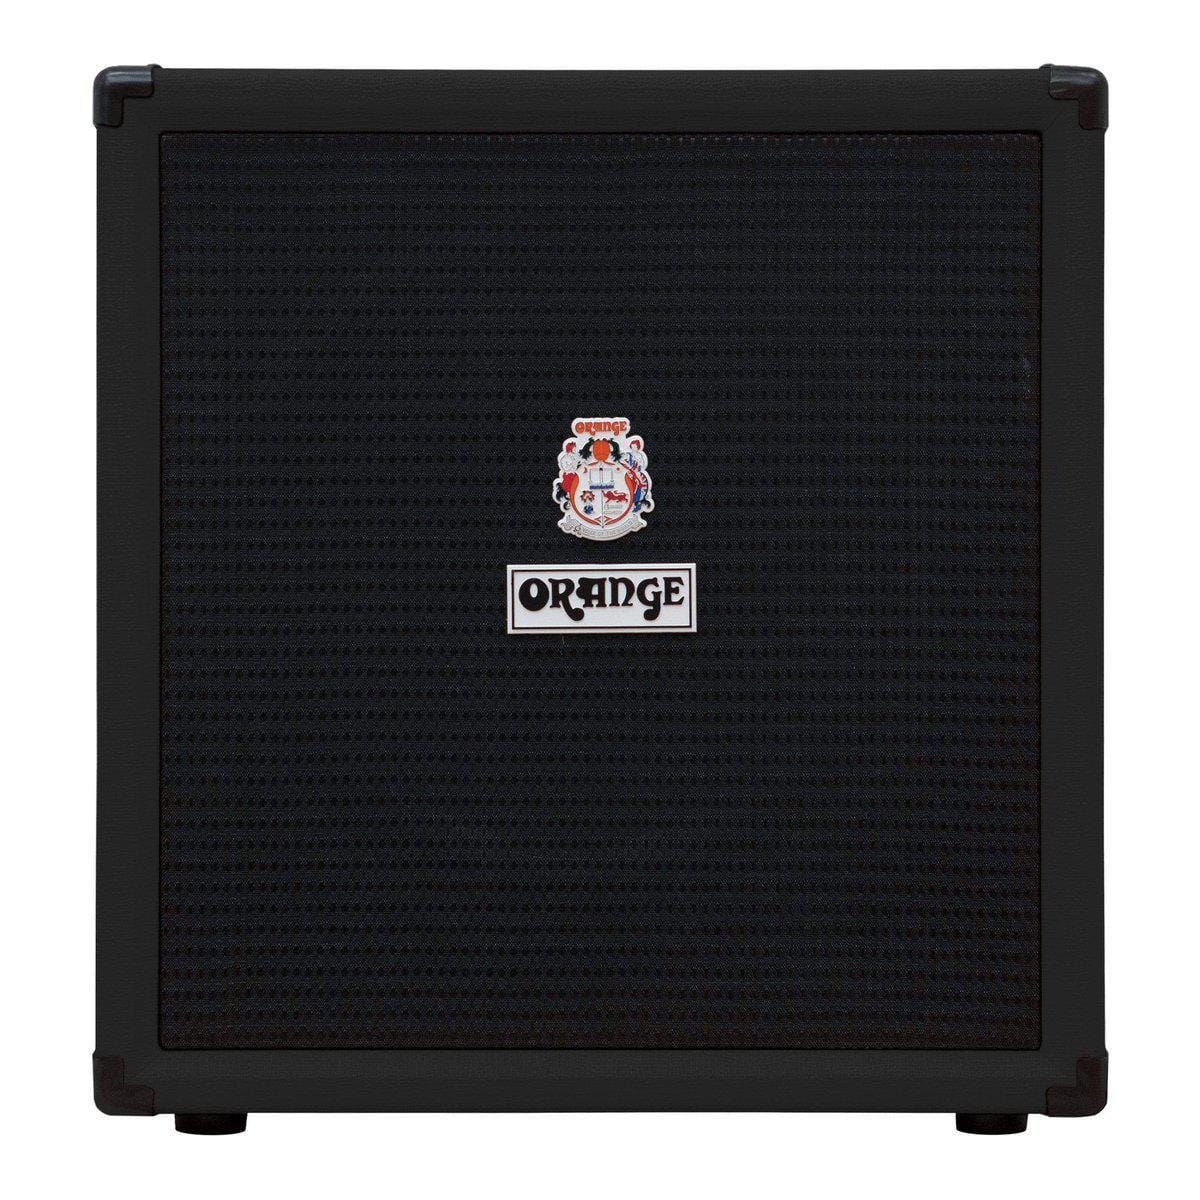 Orange Amplifier Orange Crush Bass 100 Combo, Black